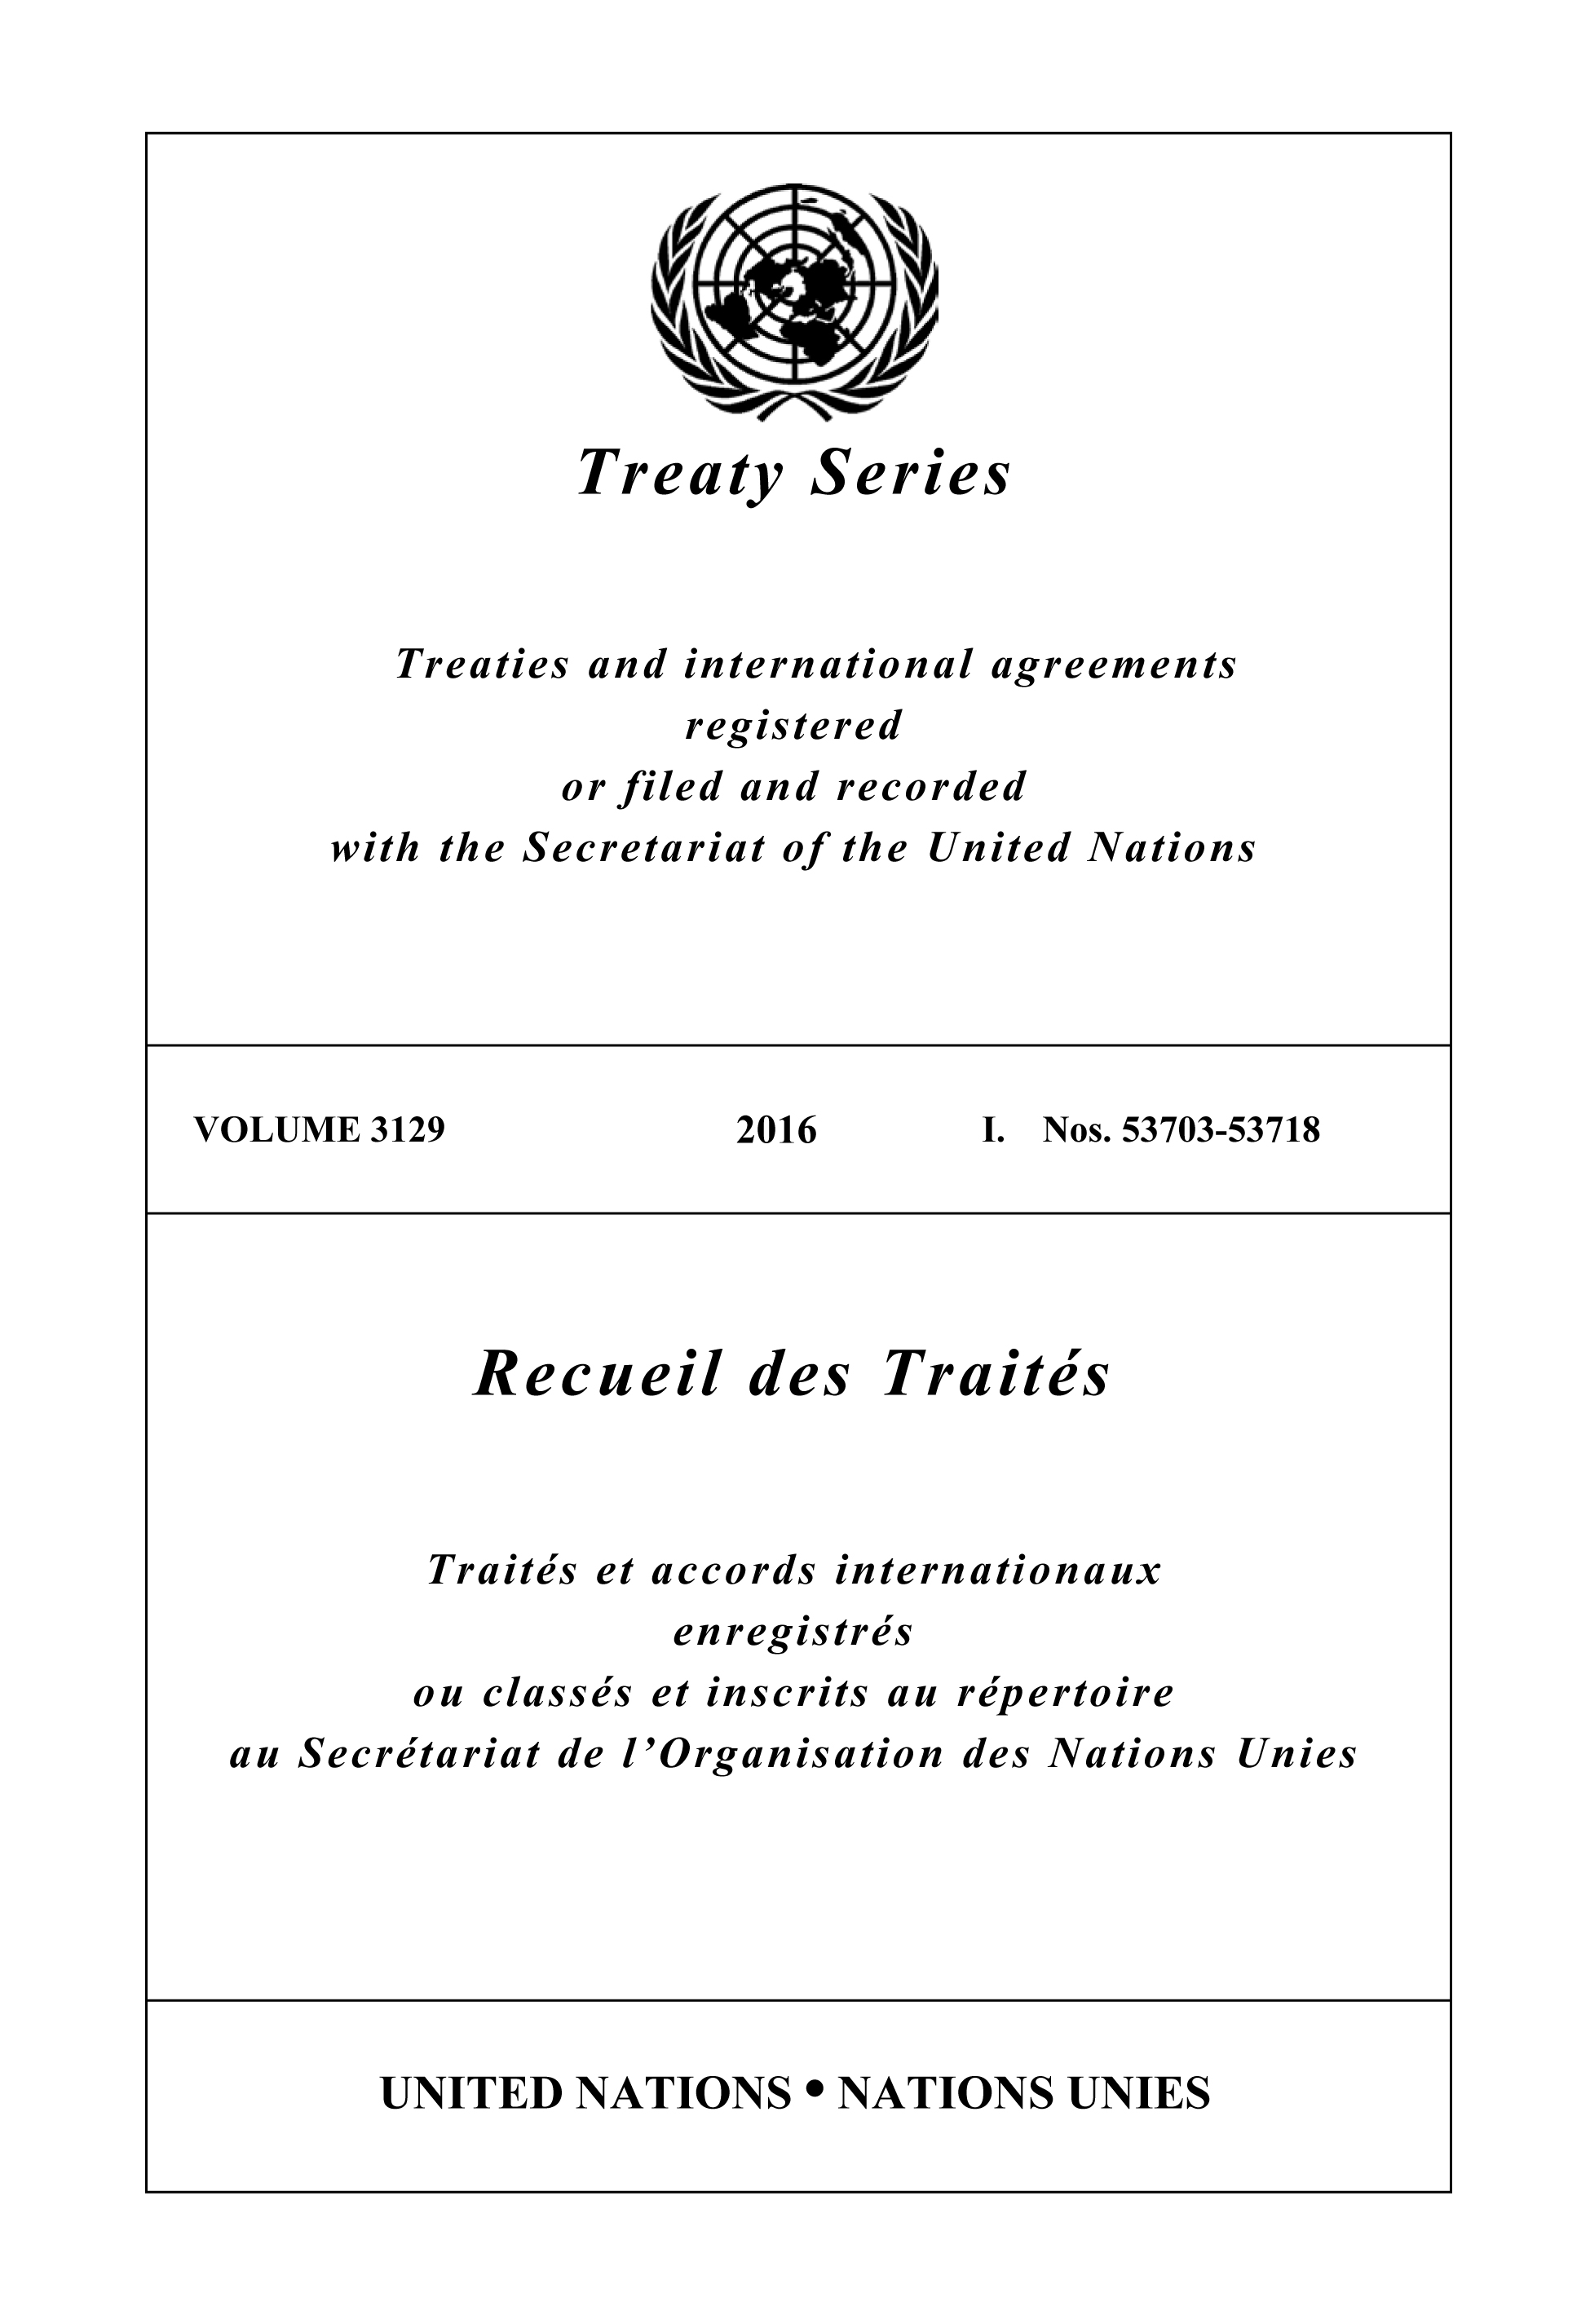 image of Treaty Series 3129